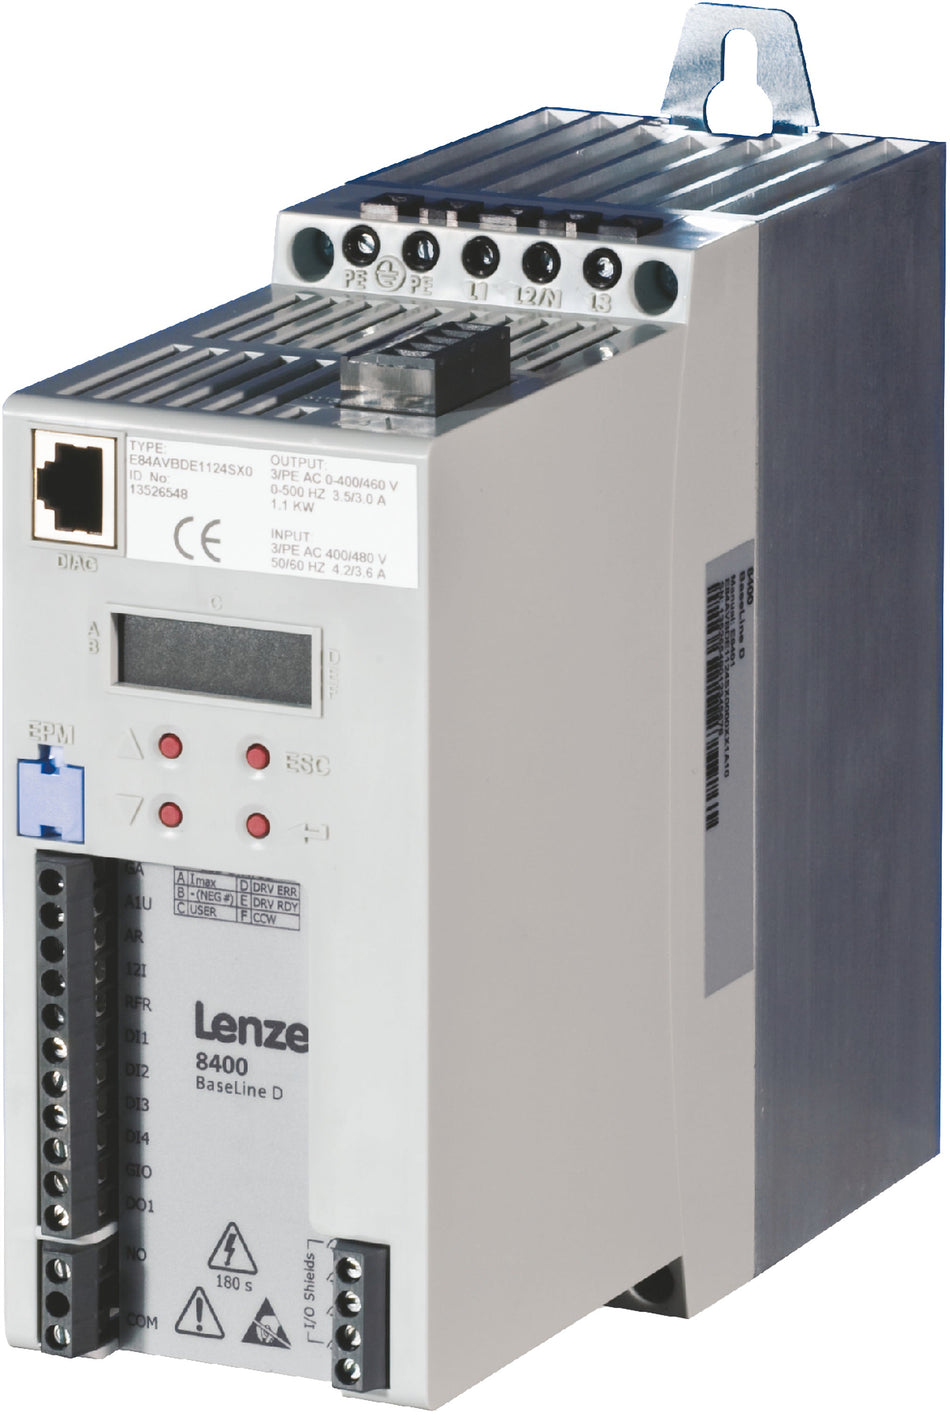 Lenze Inverter Drives 8400 BaseLine - E84AVBDE7514SX2XX3A34 0.75 kW